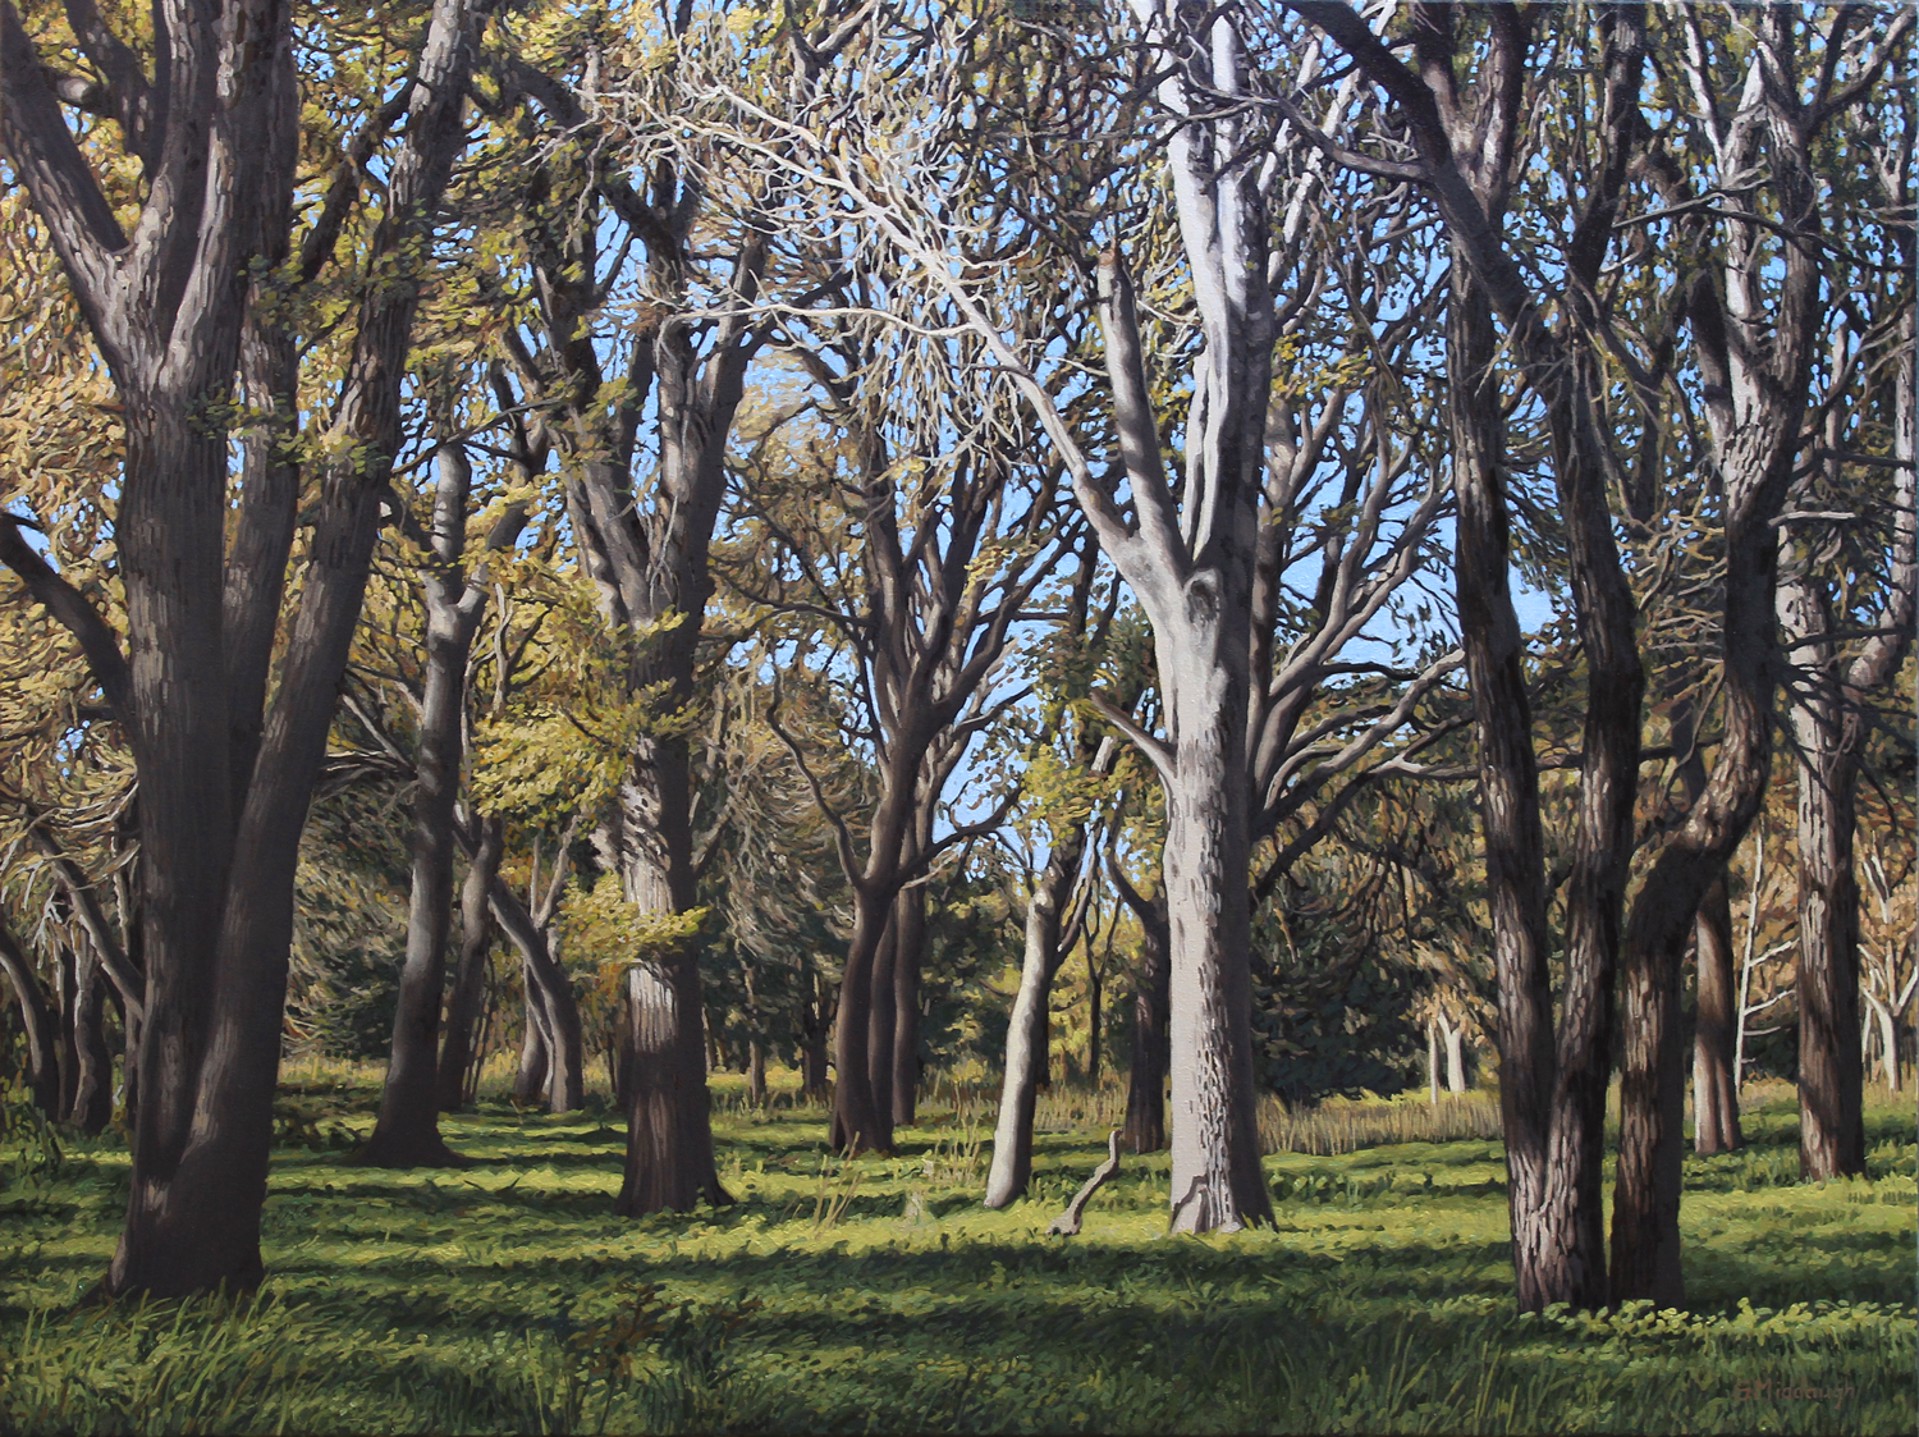 Field of Trees by Garrett Middaugh